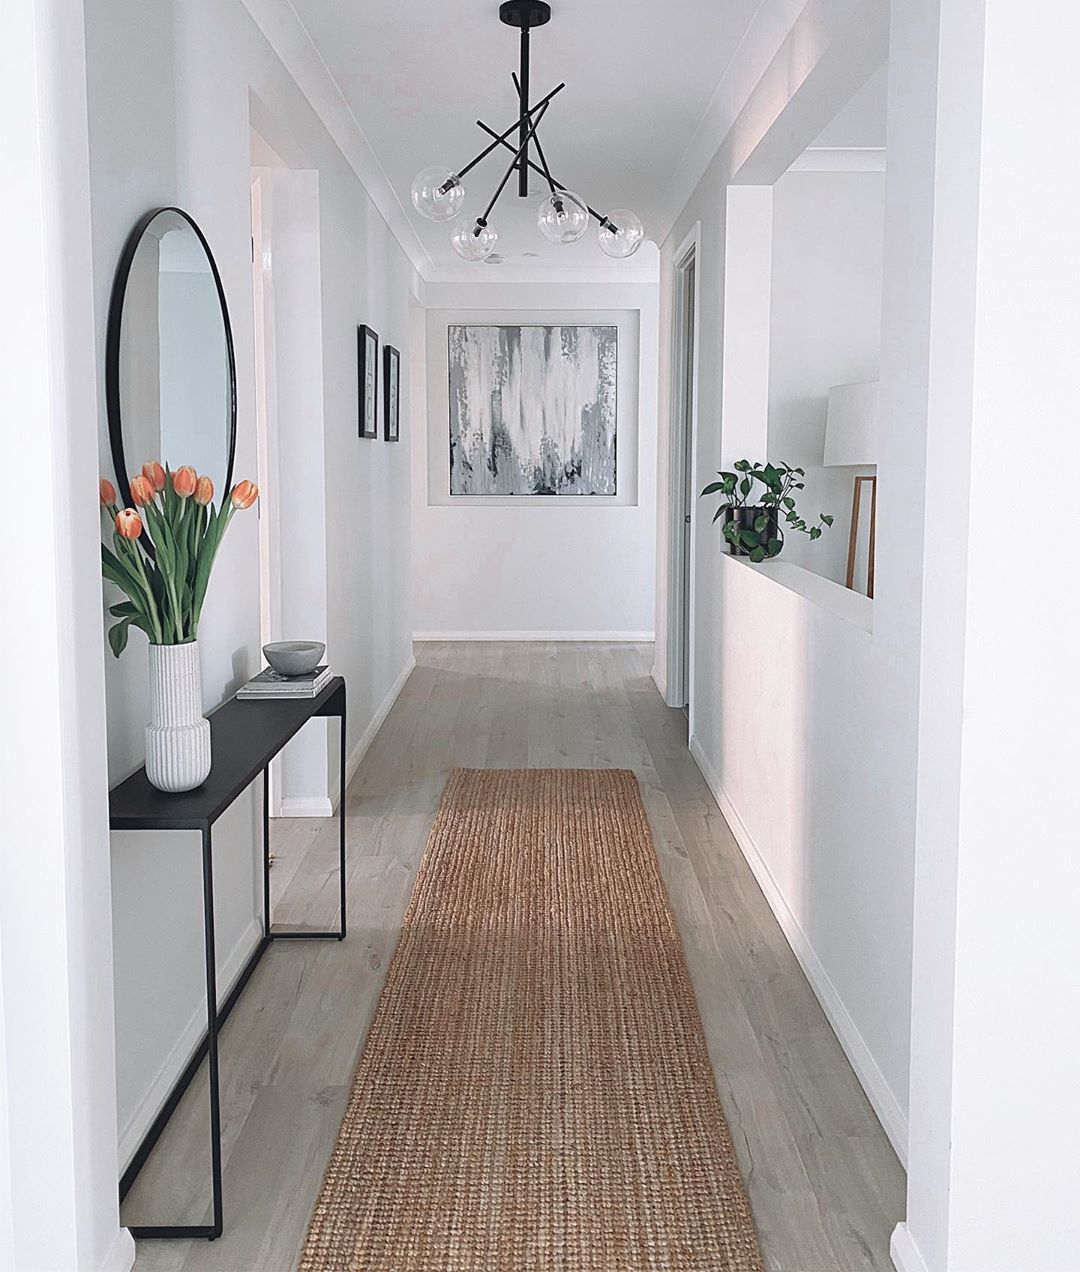 Minimalist Home with Simple Hallway. Photo by Instagram user @housetwentyfive